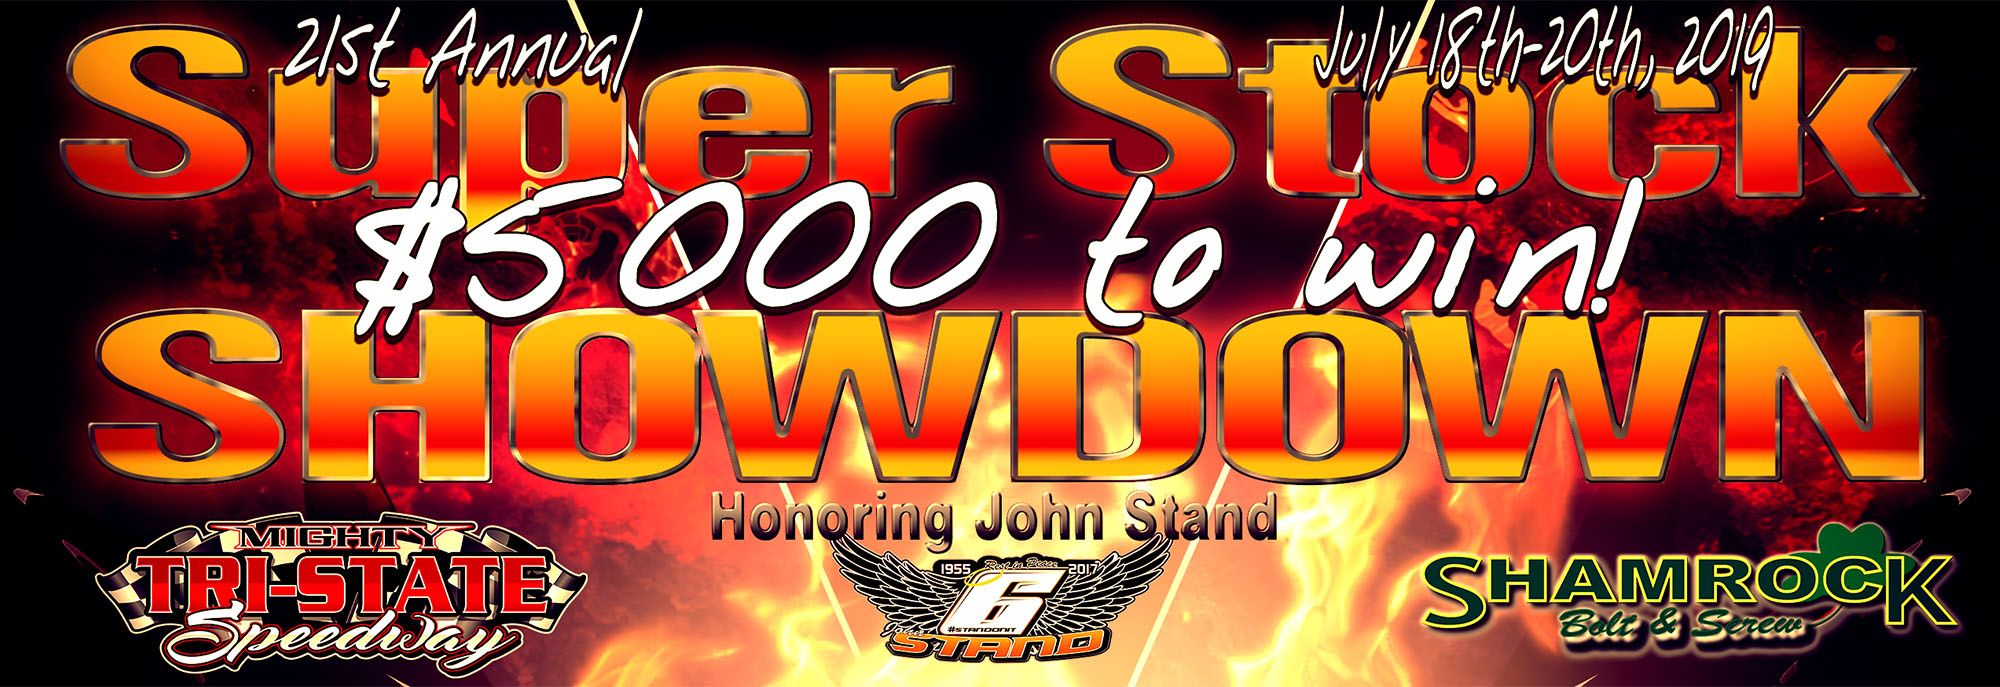 21st Annual Super Stock Showdown Honoring John Stand